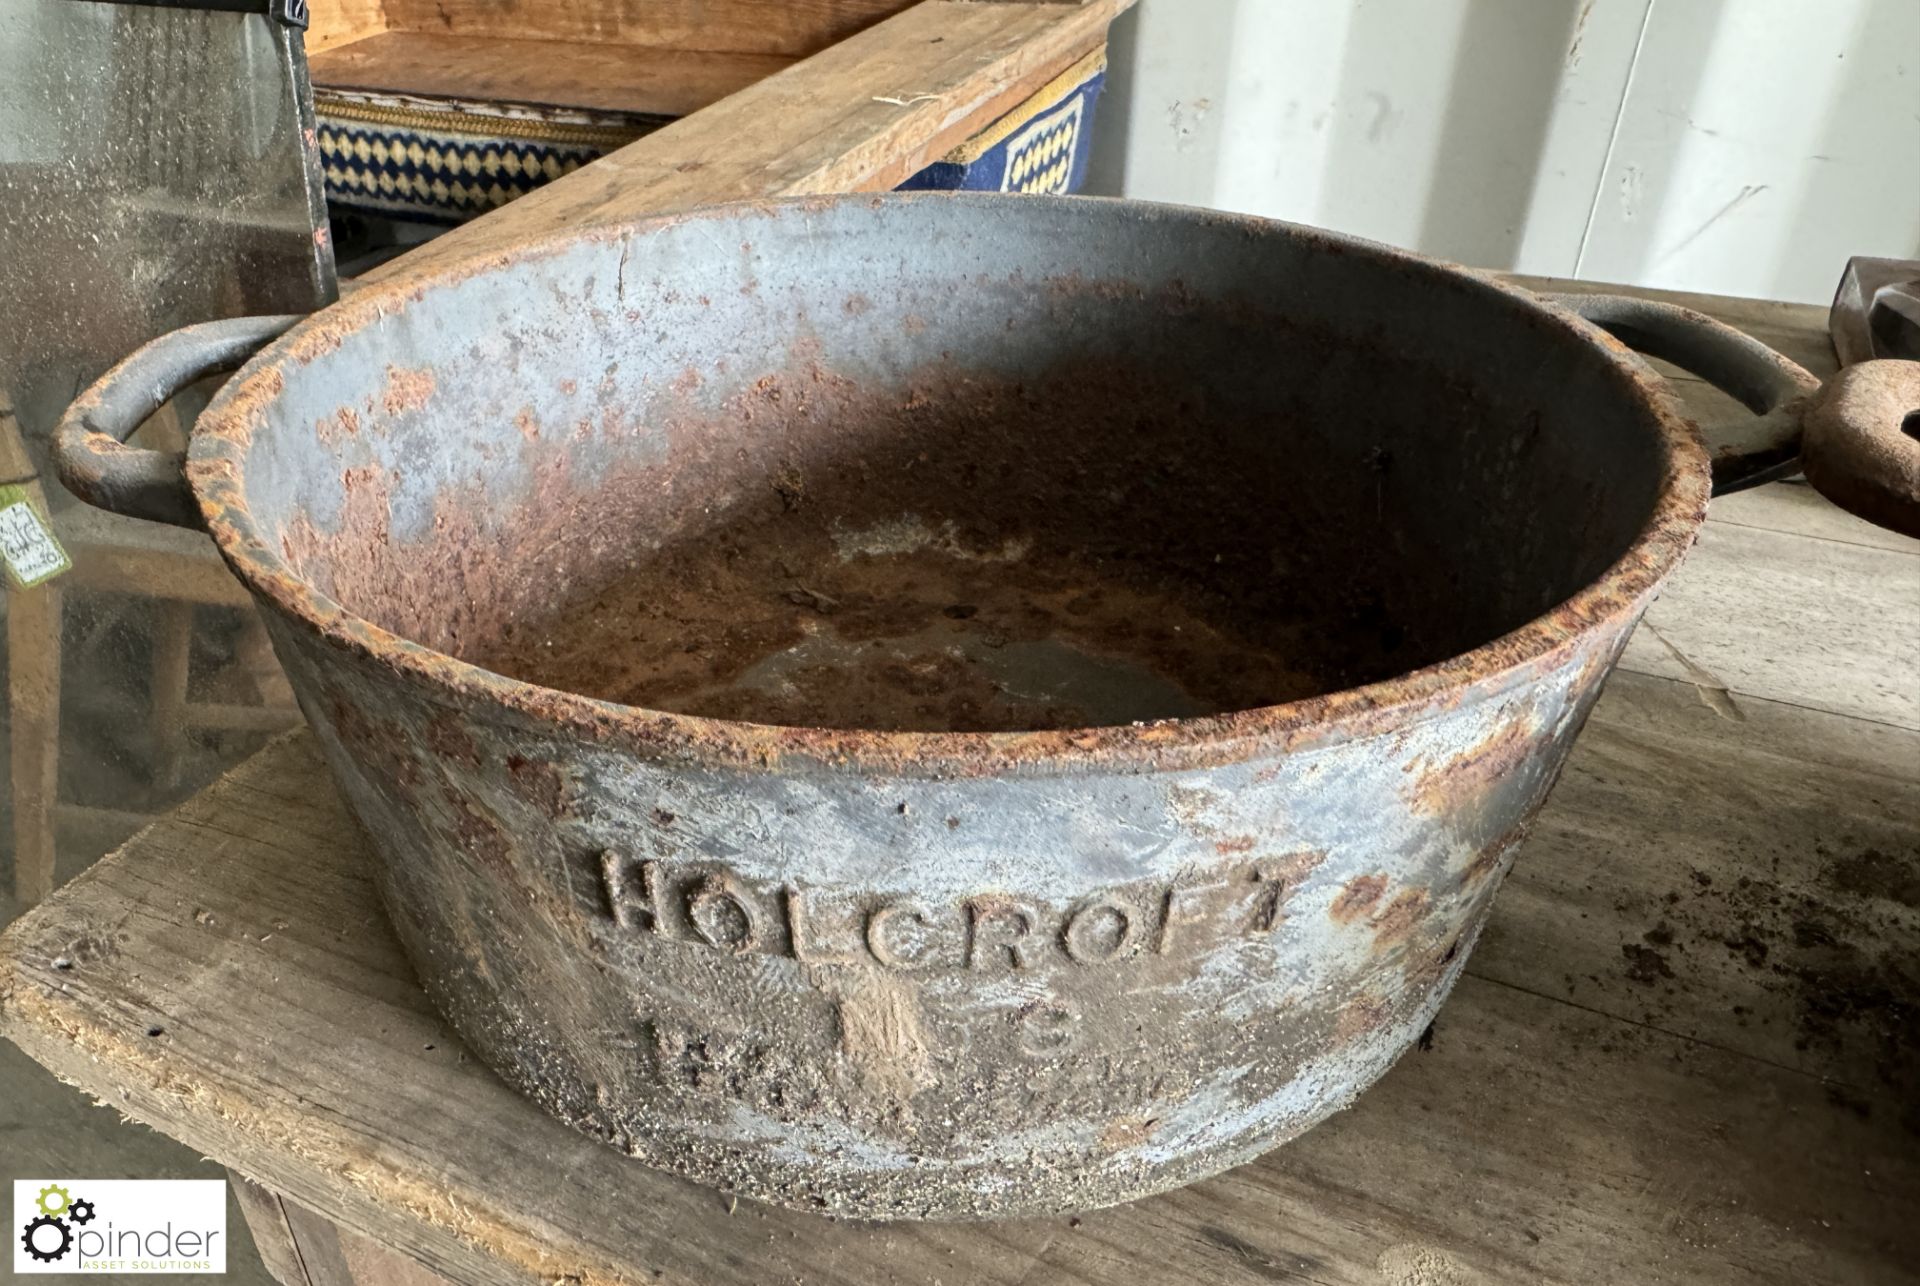 2 cast iron Range Pans, maker's mark "Holcroft 8" - Image 2 of 5